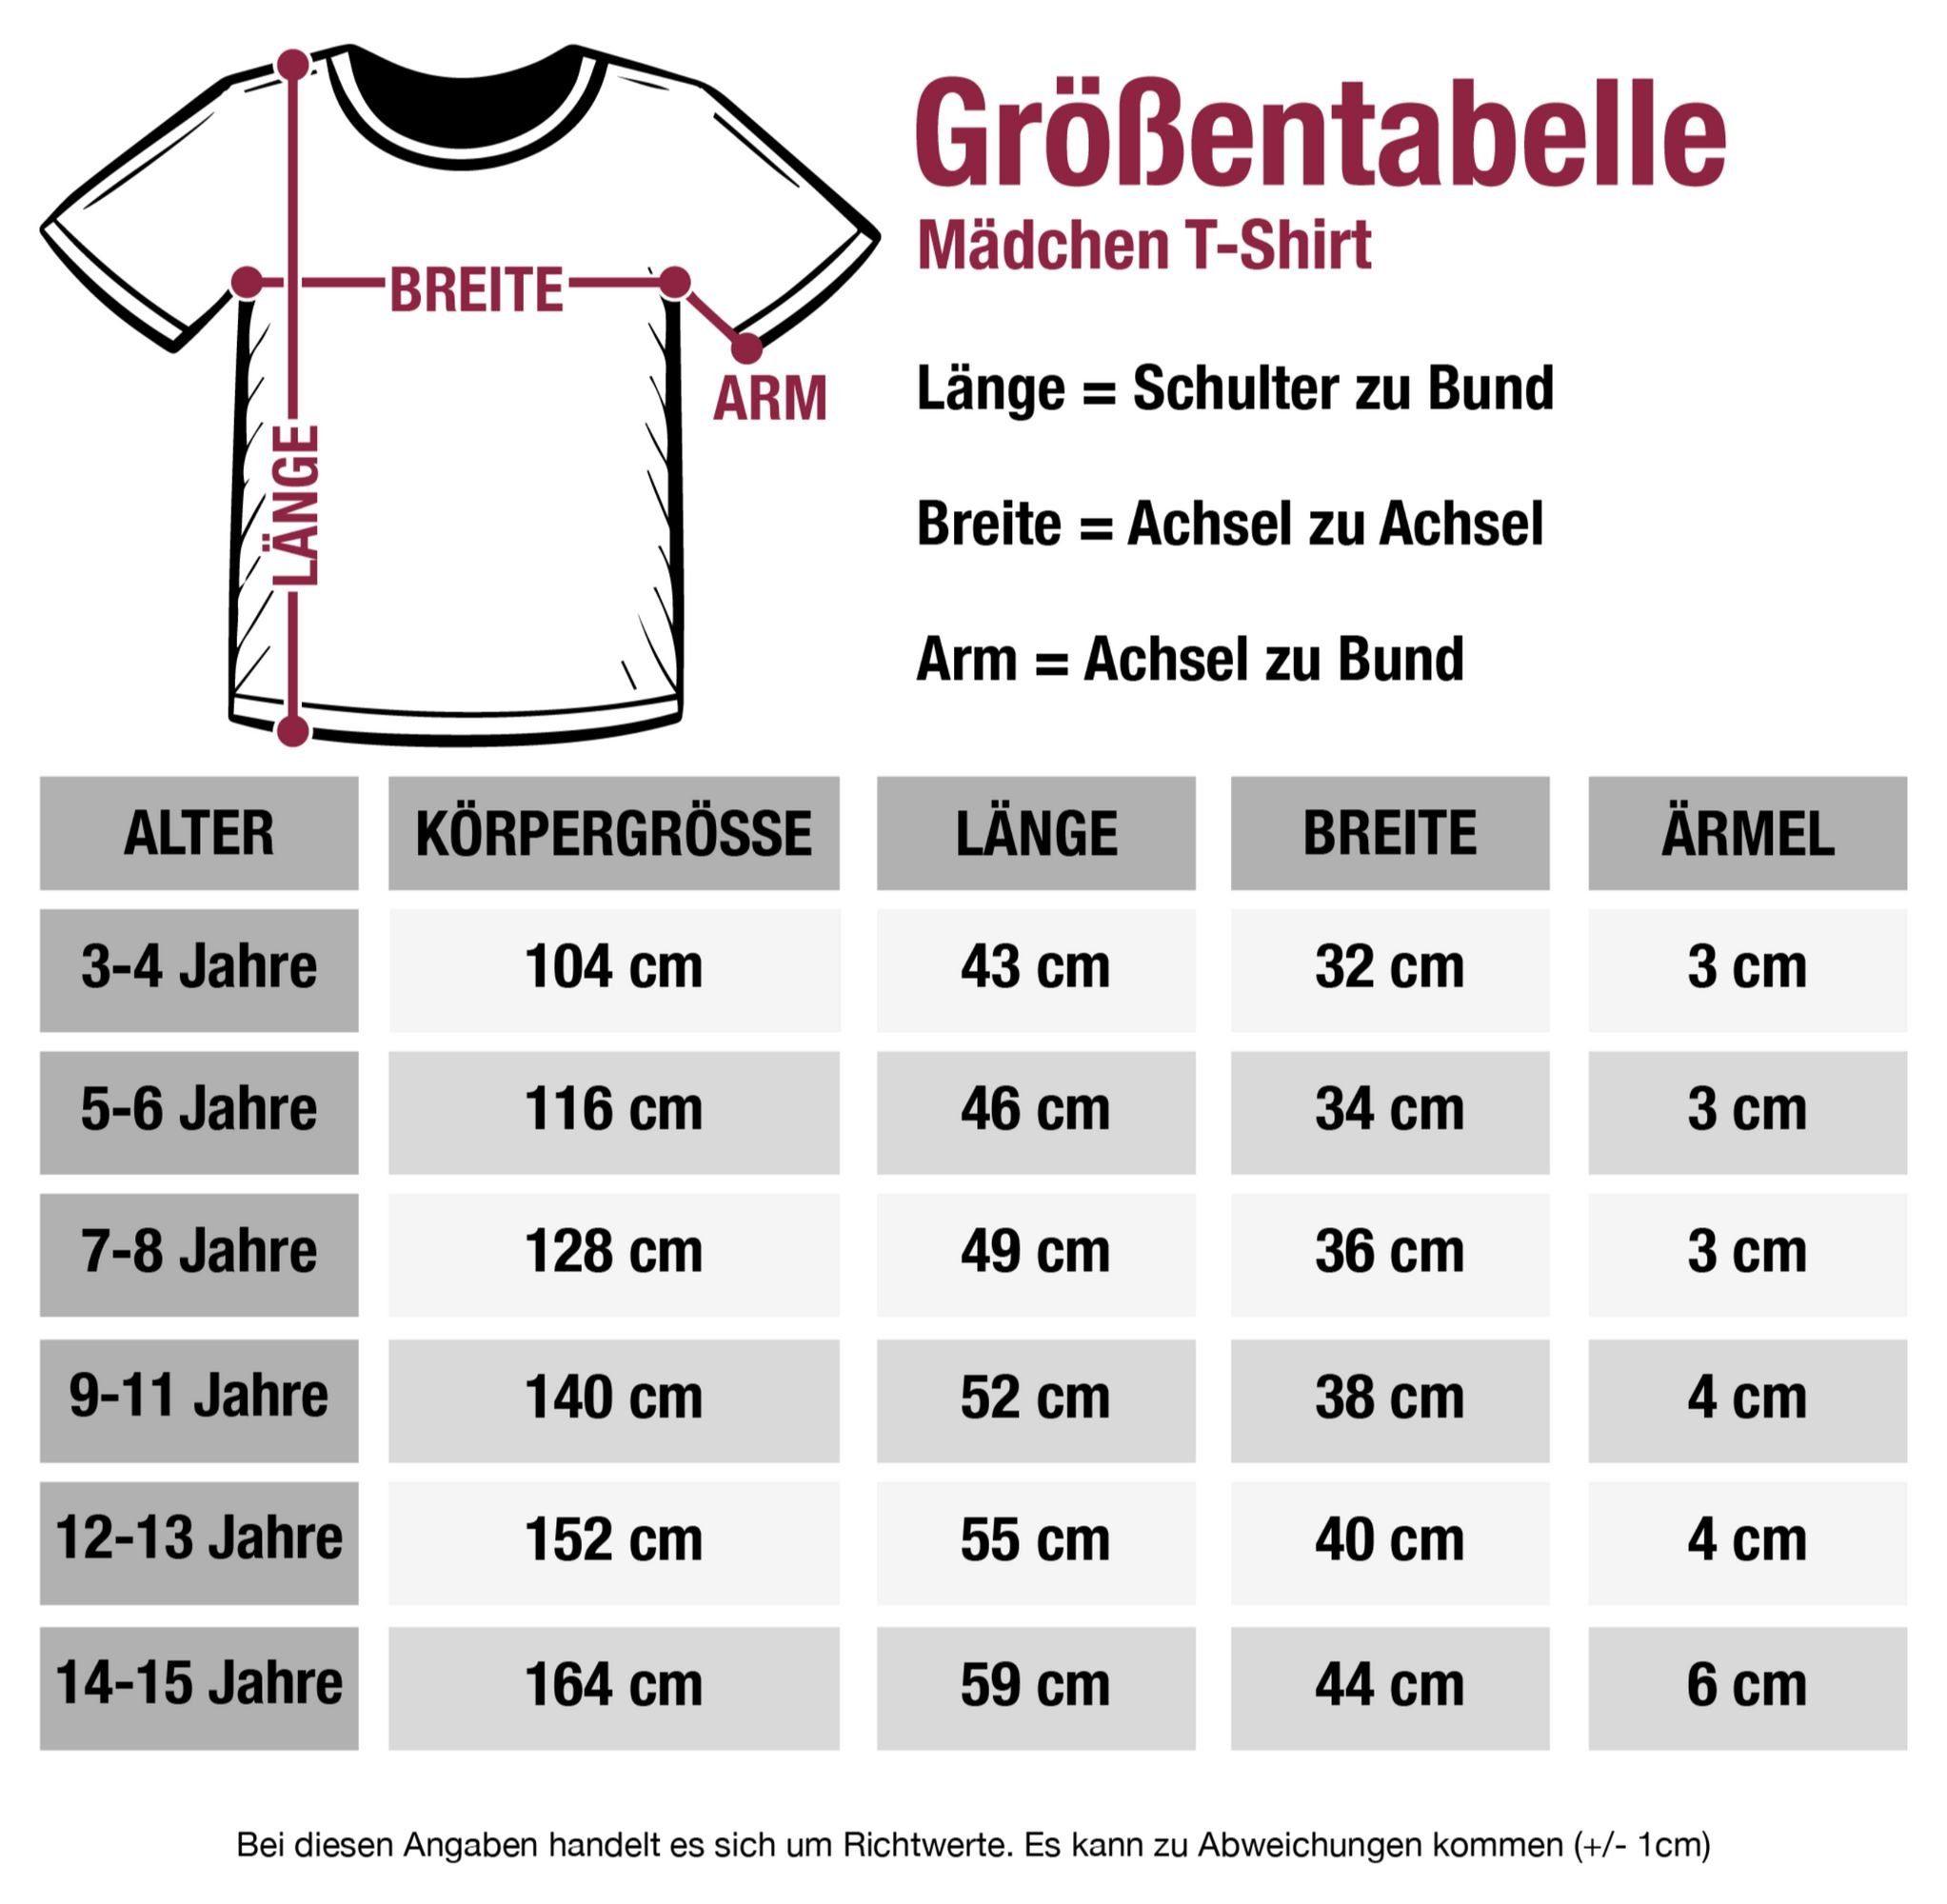 Shirtracer T-Shirt schwarz Kinder ruft Rosa - 2 Kleidung Sport Berg Der